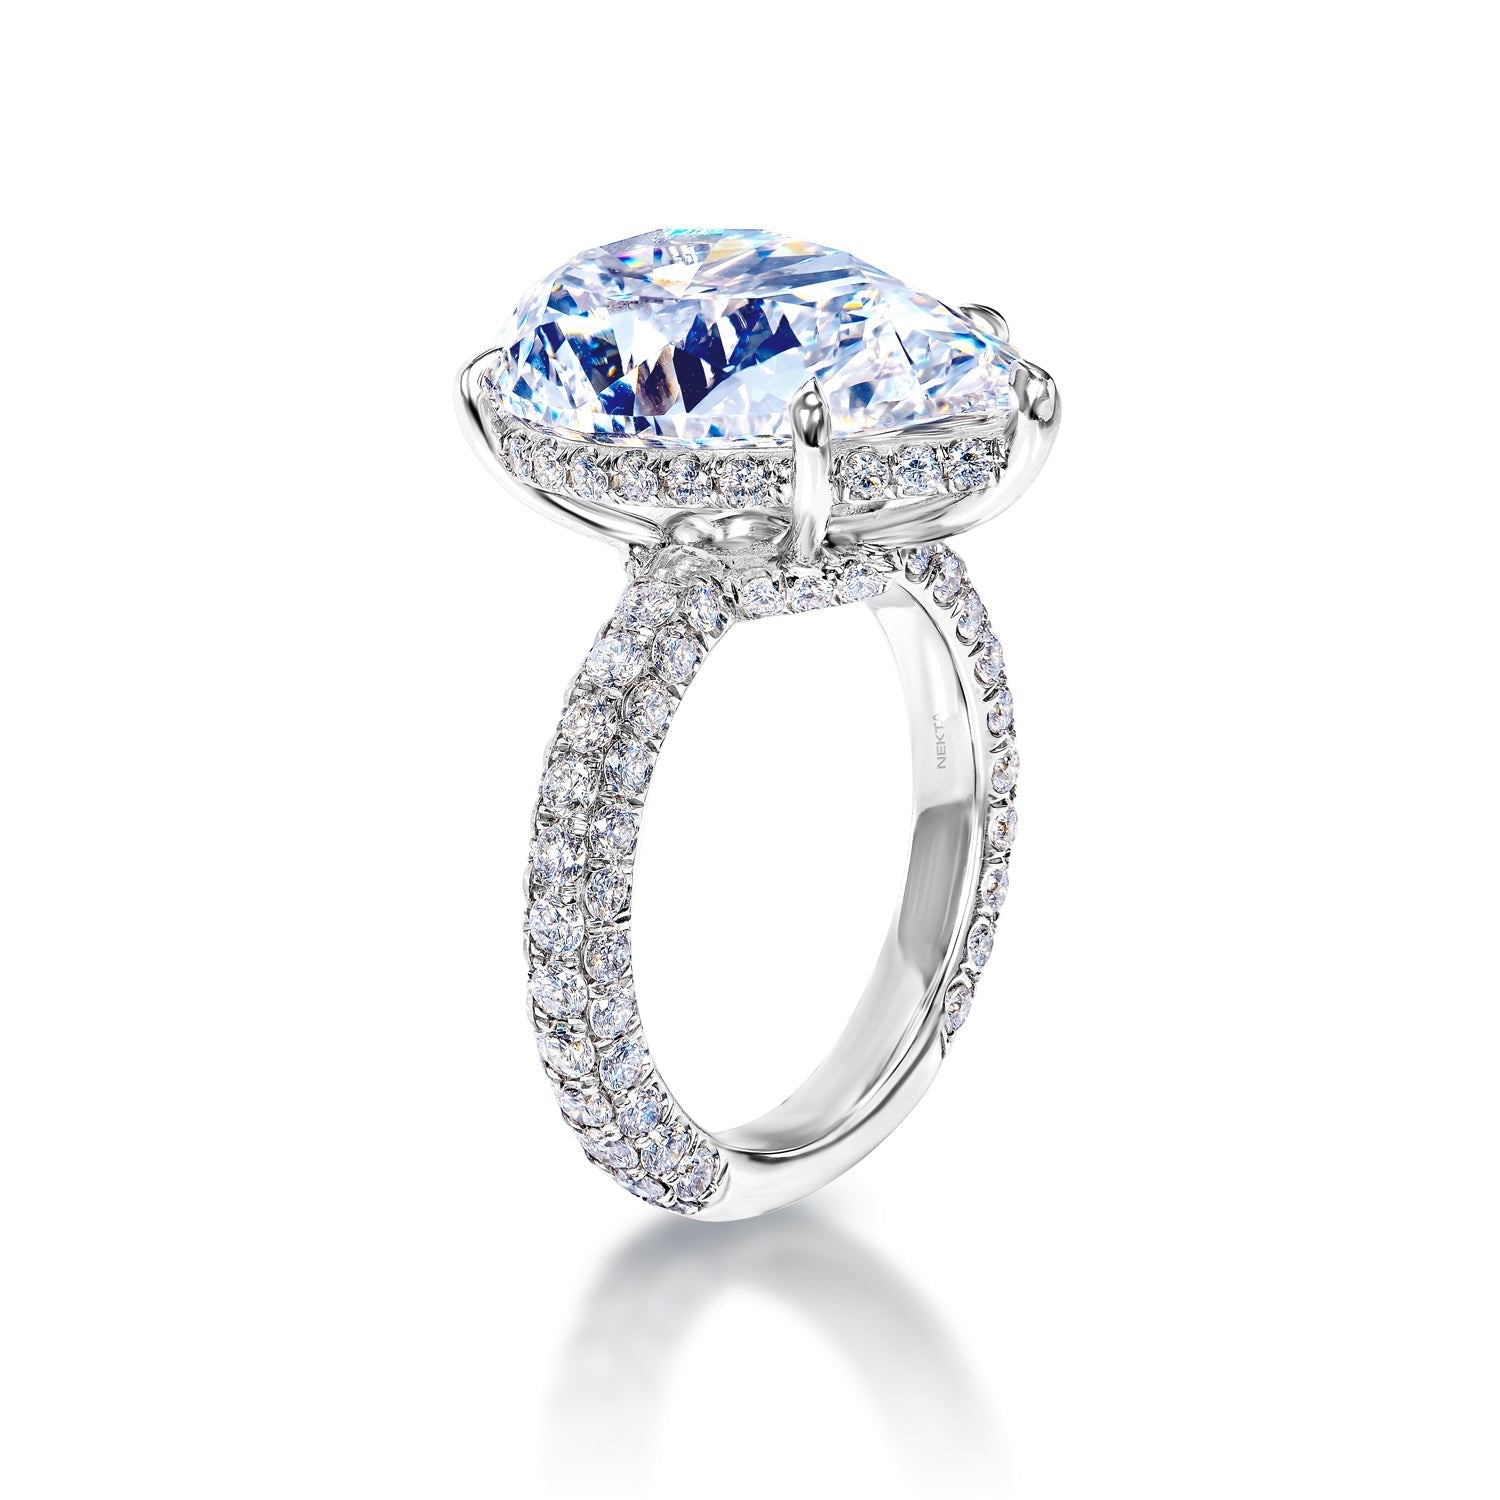 Jane 15 Carats Pear Shape E VVS1 Diamond Engagement Ring in Platinum Side View